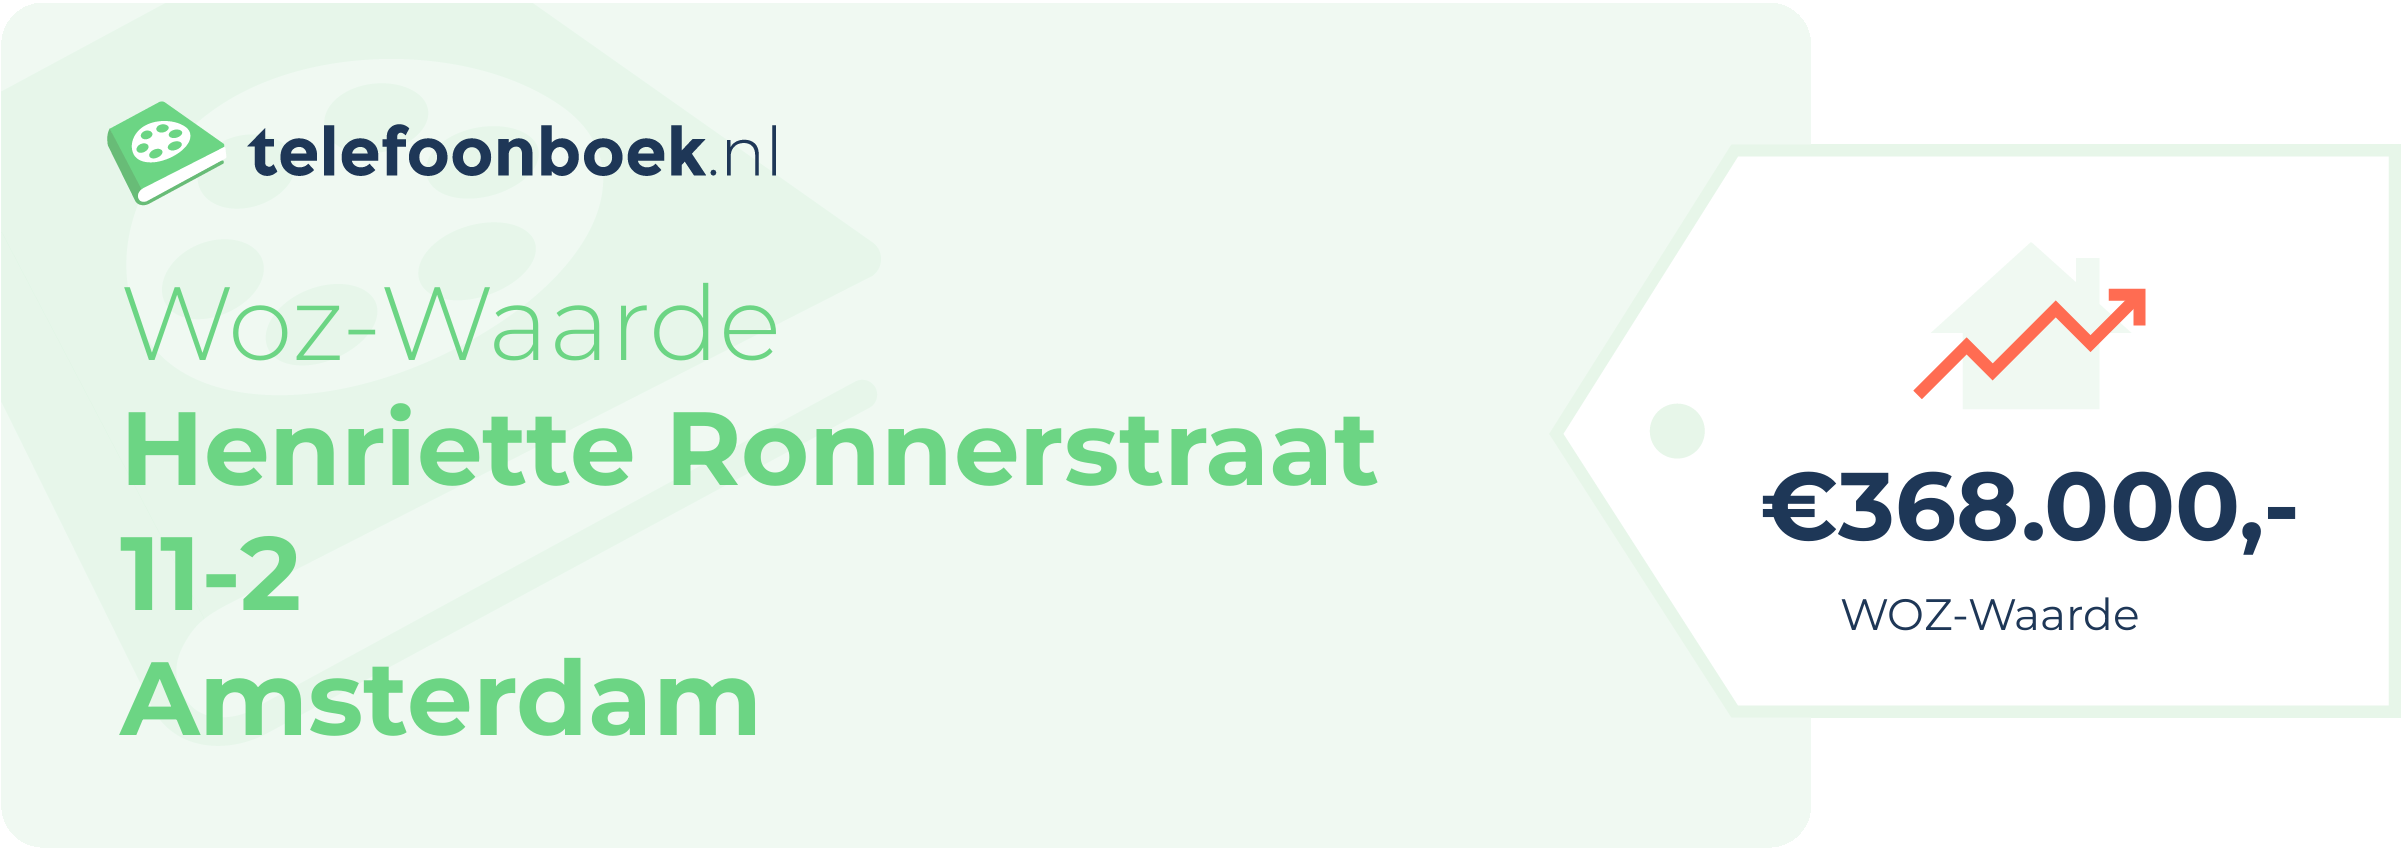 WOZ-waarde Henriette Ronnerstraat 11-2 Amsterdam